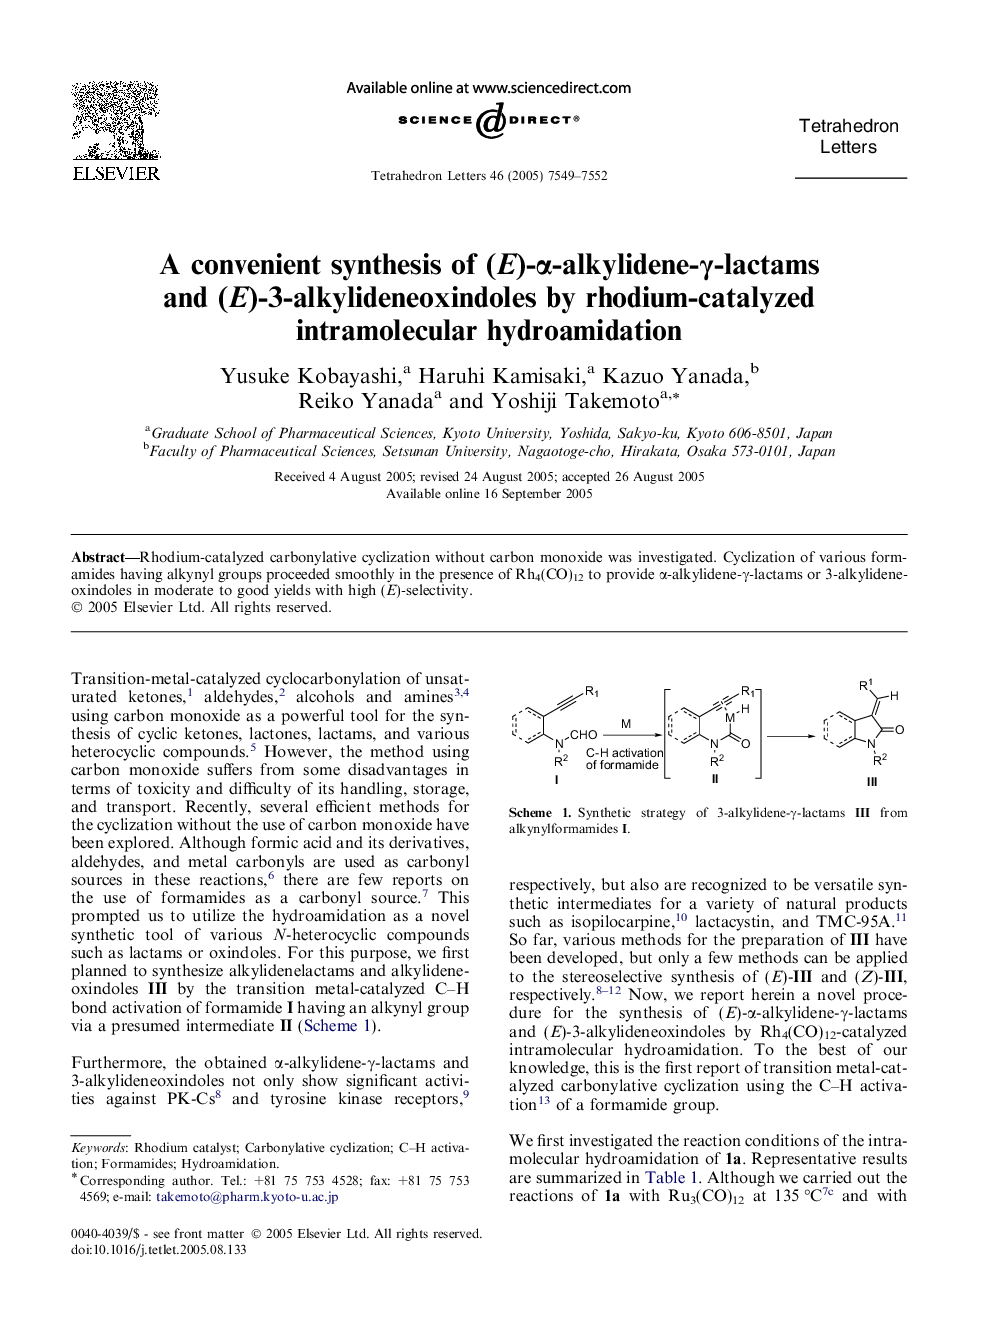 A convenient synthesis of (E)-Î±-alkylidene-Î³-lactams and (E)-3-alkylideneoxindoles by rhodium-catalyzed intramolecular hydroamidation